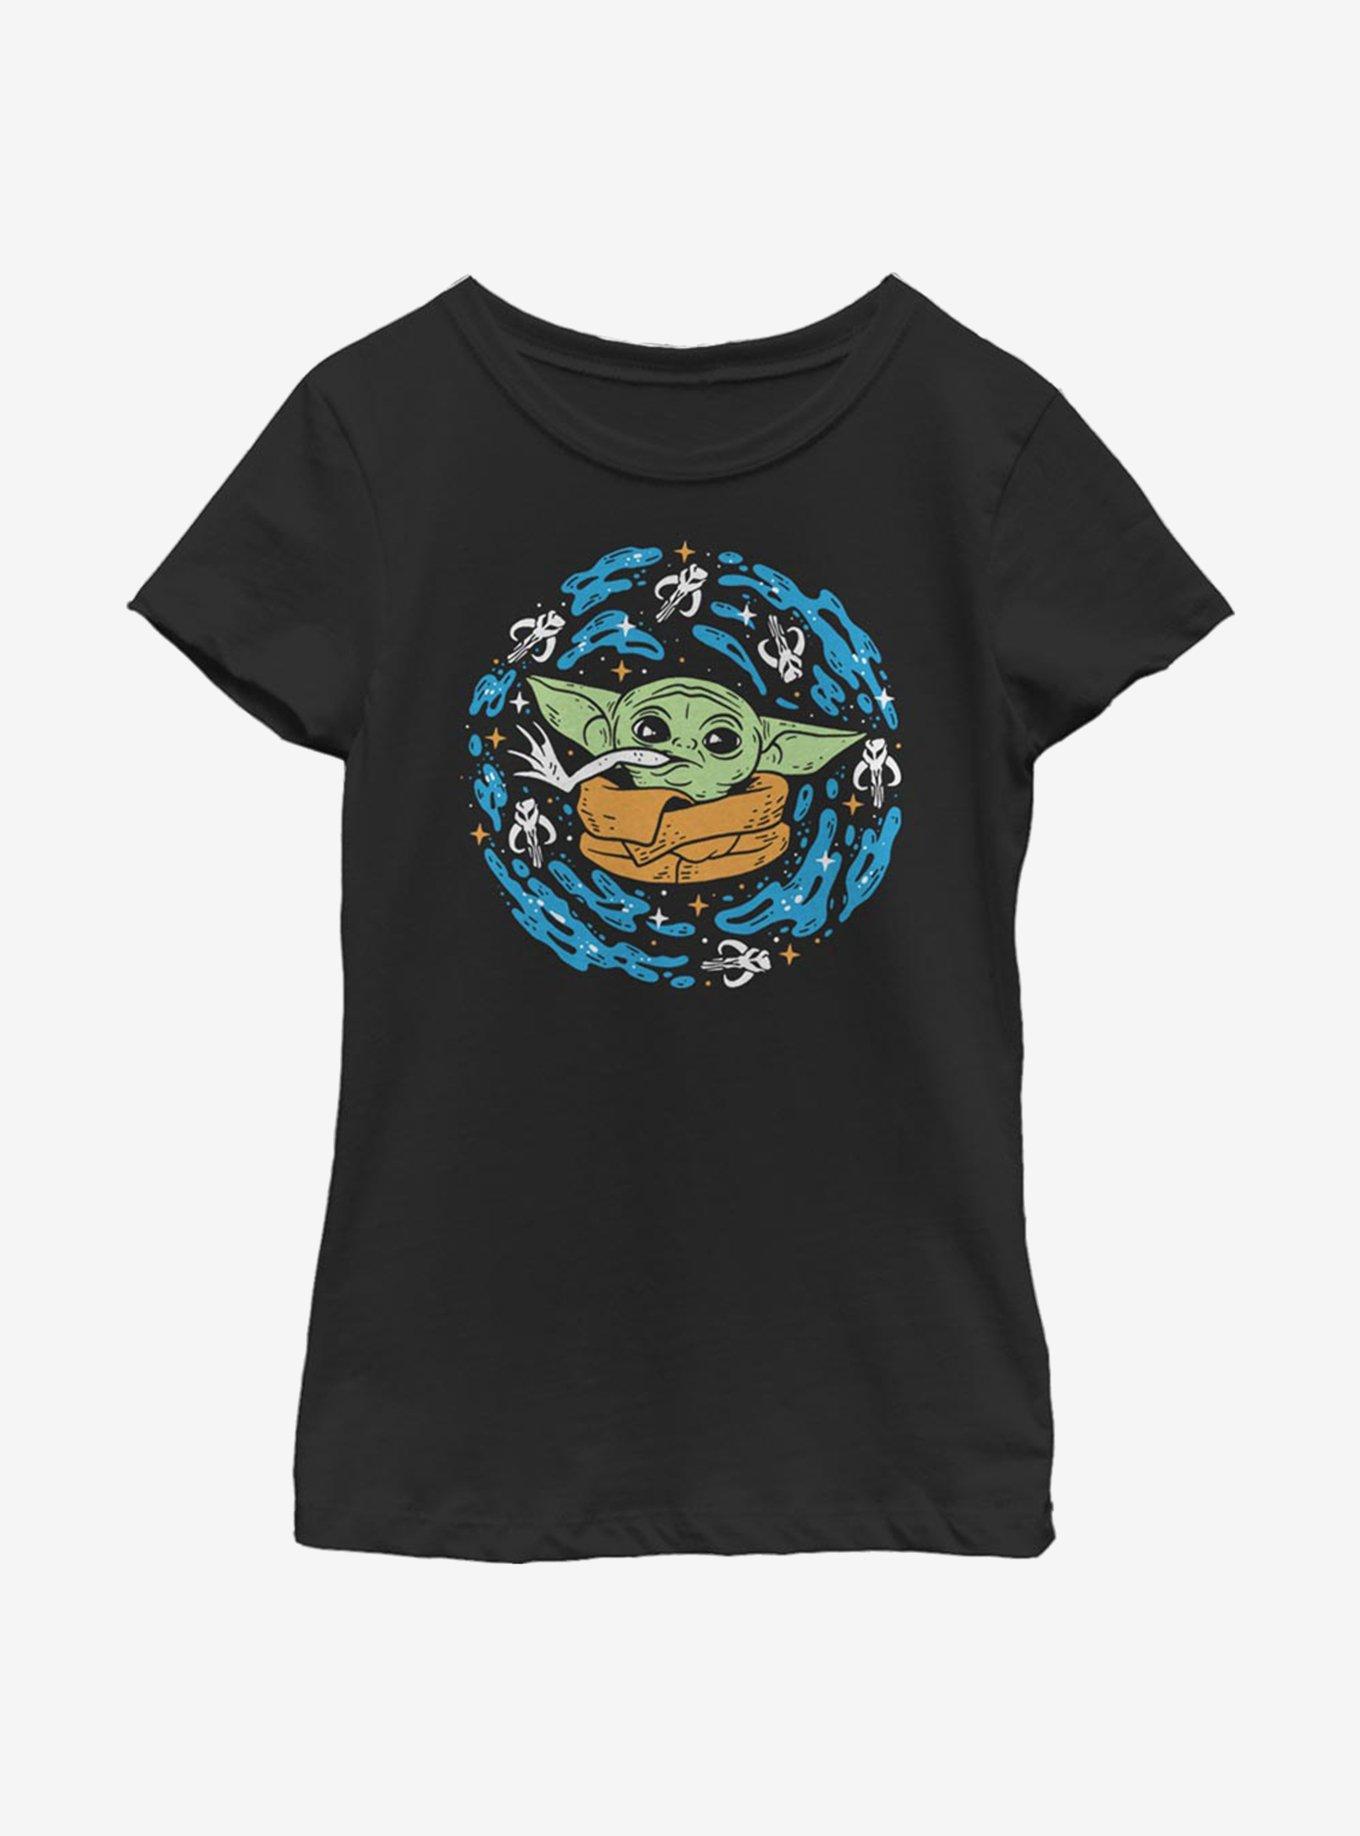 Star Wars The Mandalorian The Child Frog Spiral Youth Girls T-Shirt, BLACK, hi-res